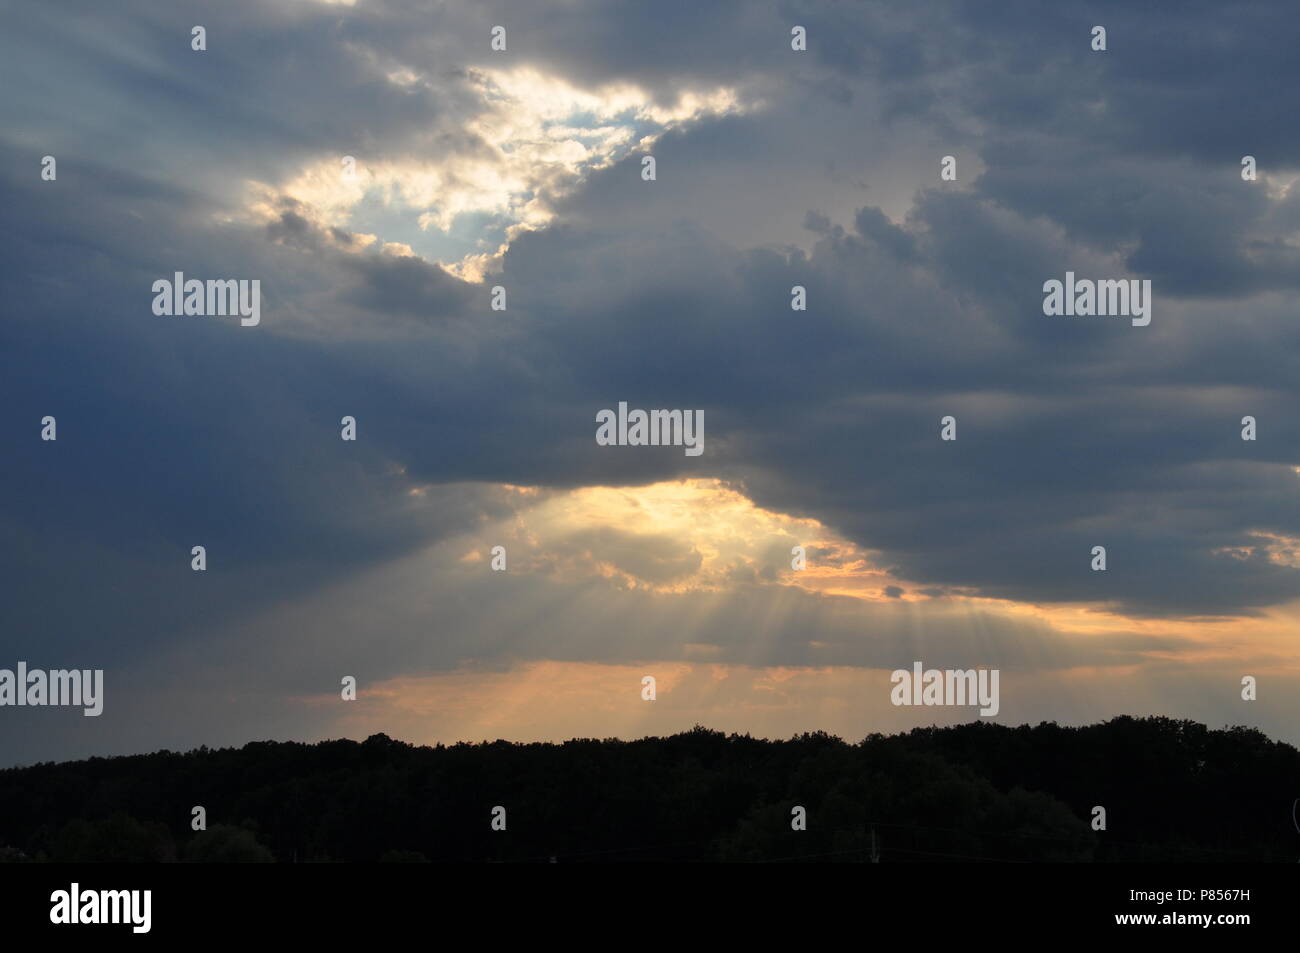 Sonnenuntergang mit Wolken, Wetter, Himmel. Stockfoto